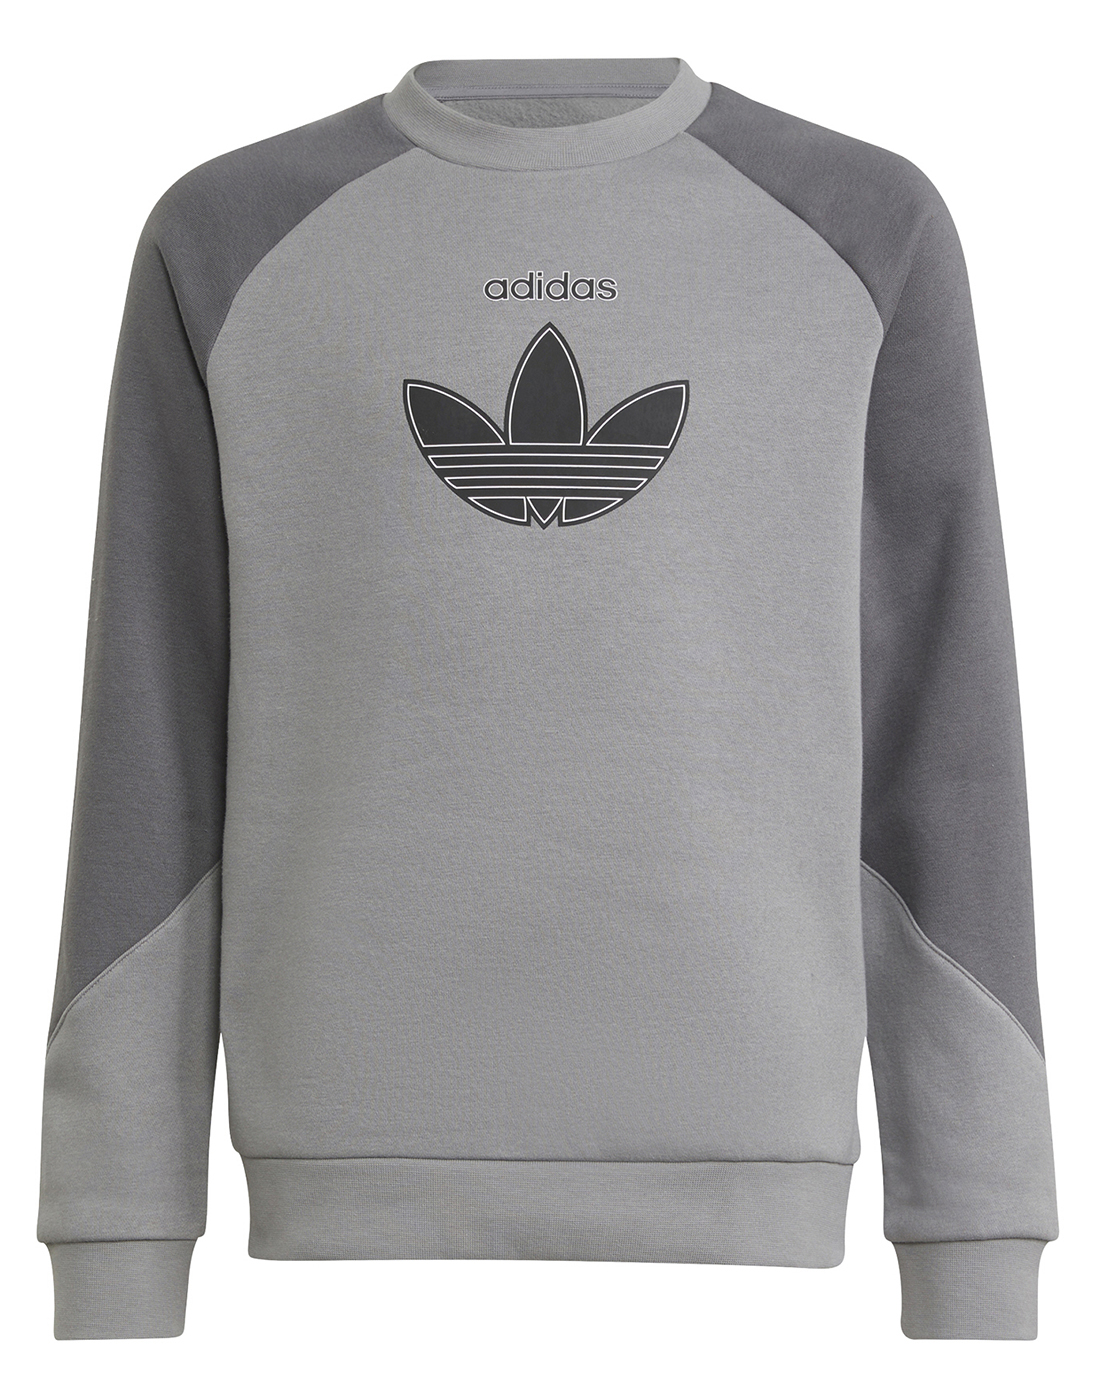 adidas Originals Older Boys Crew Neck Sweatshirt - Grey | Life Style ...